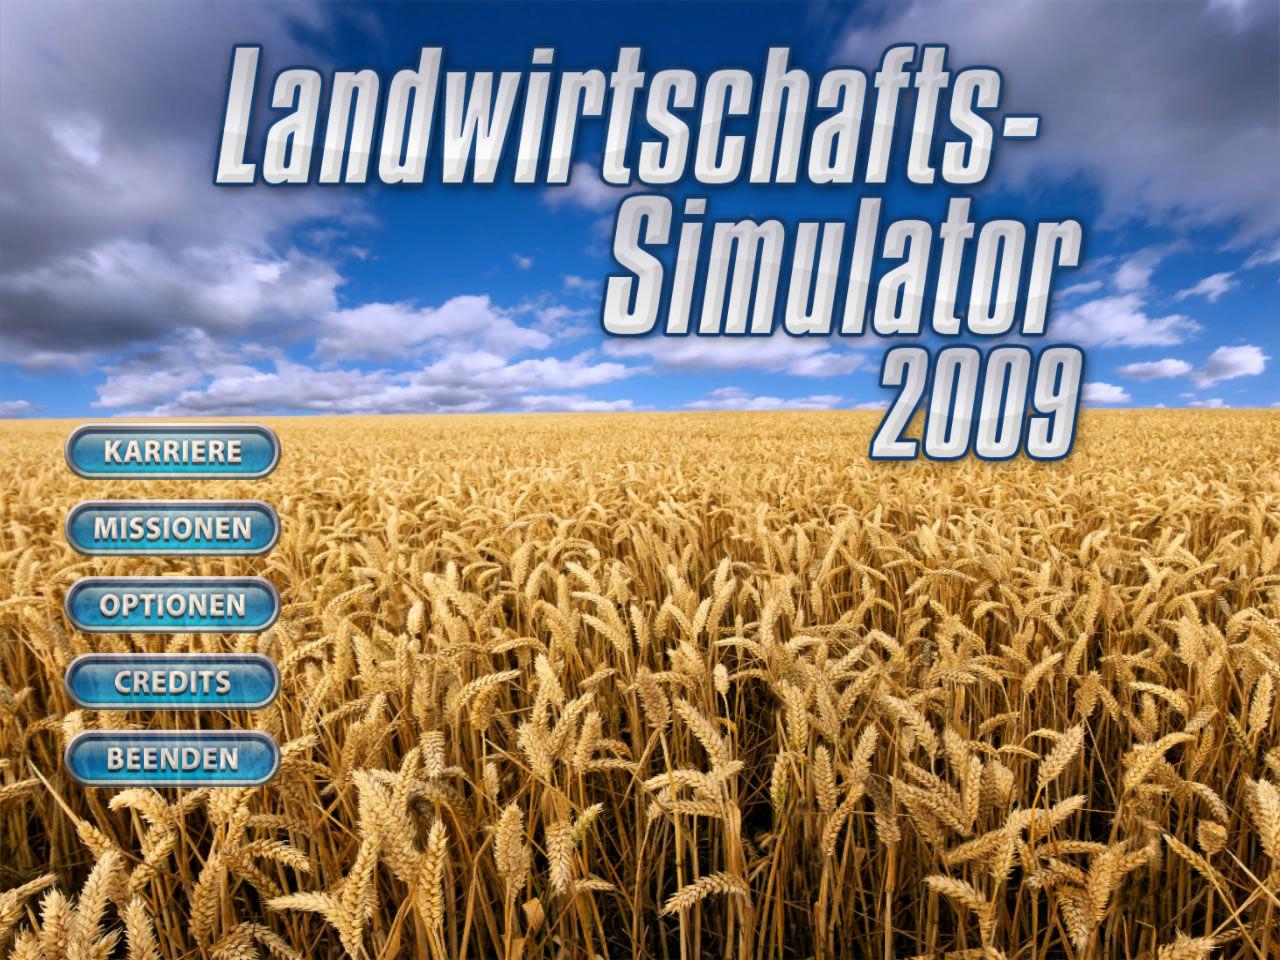 download farming simulator 2009 gold edition